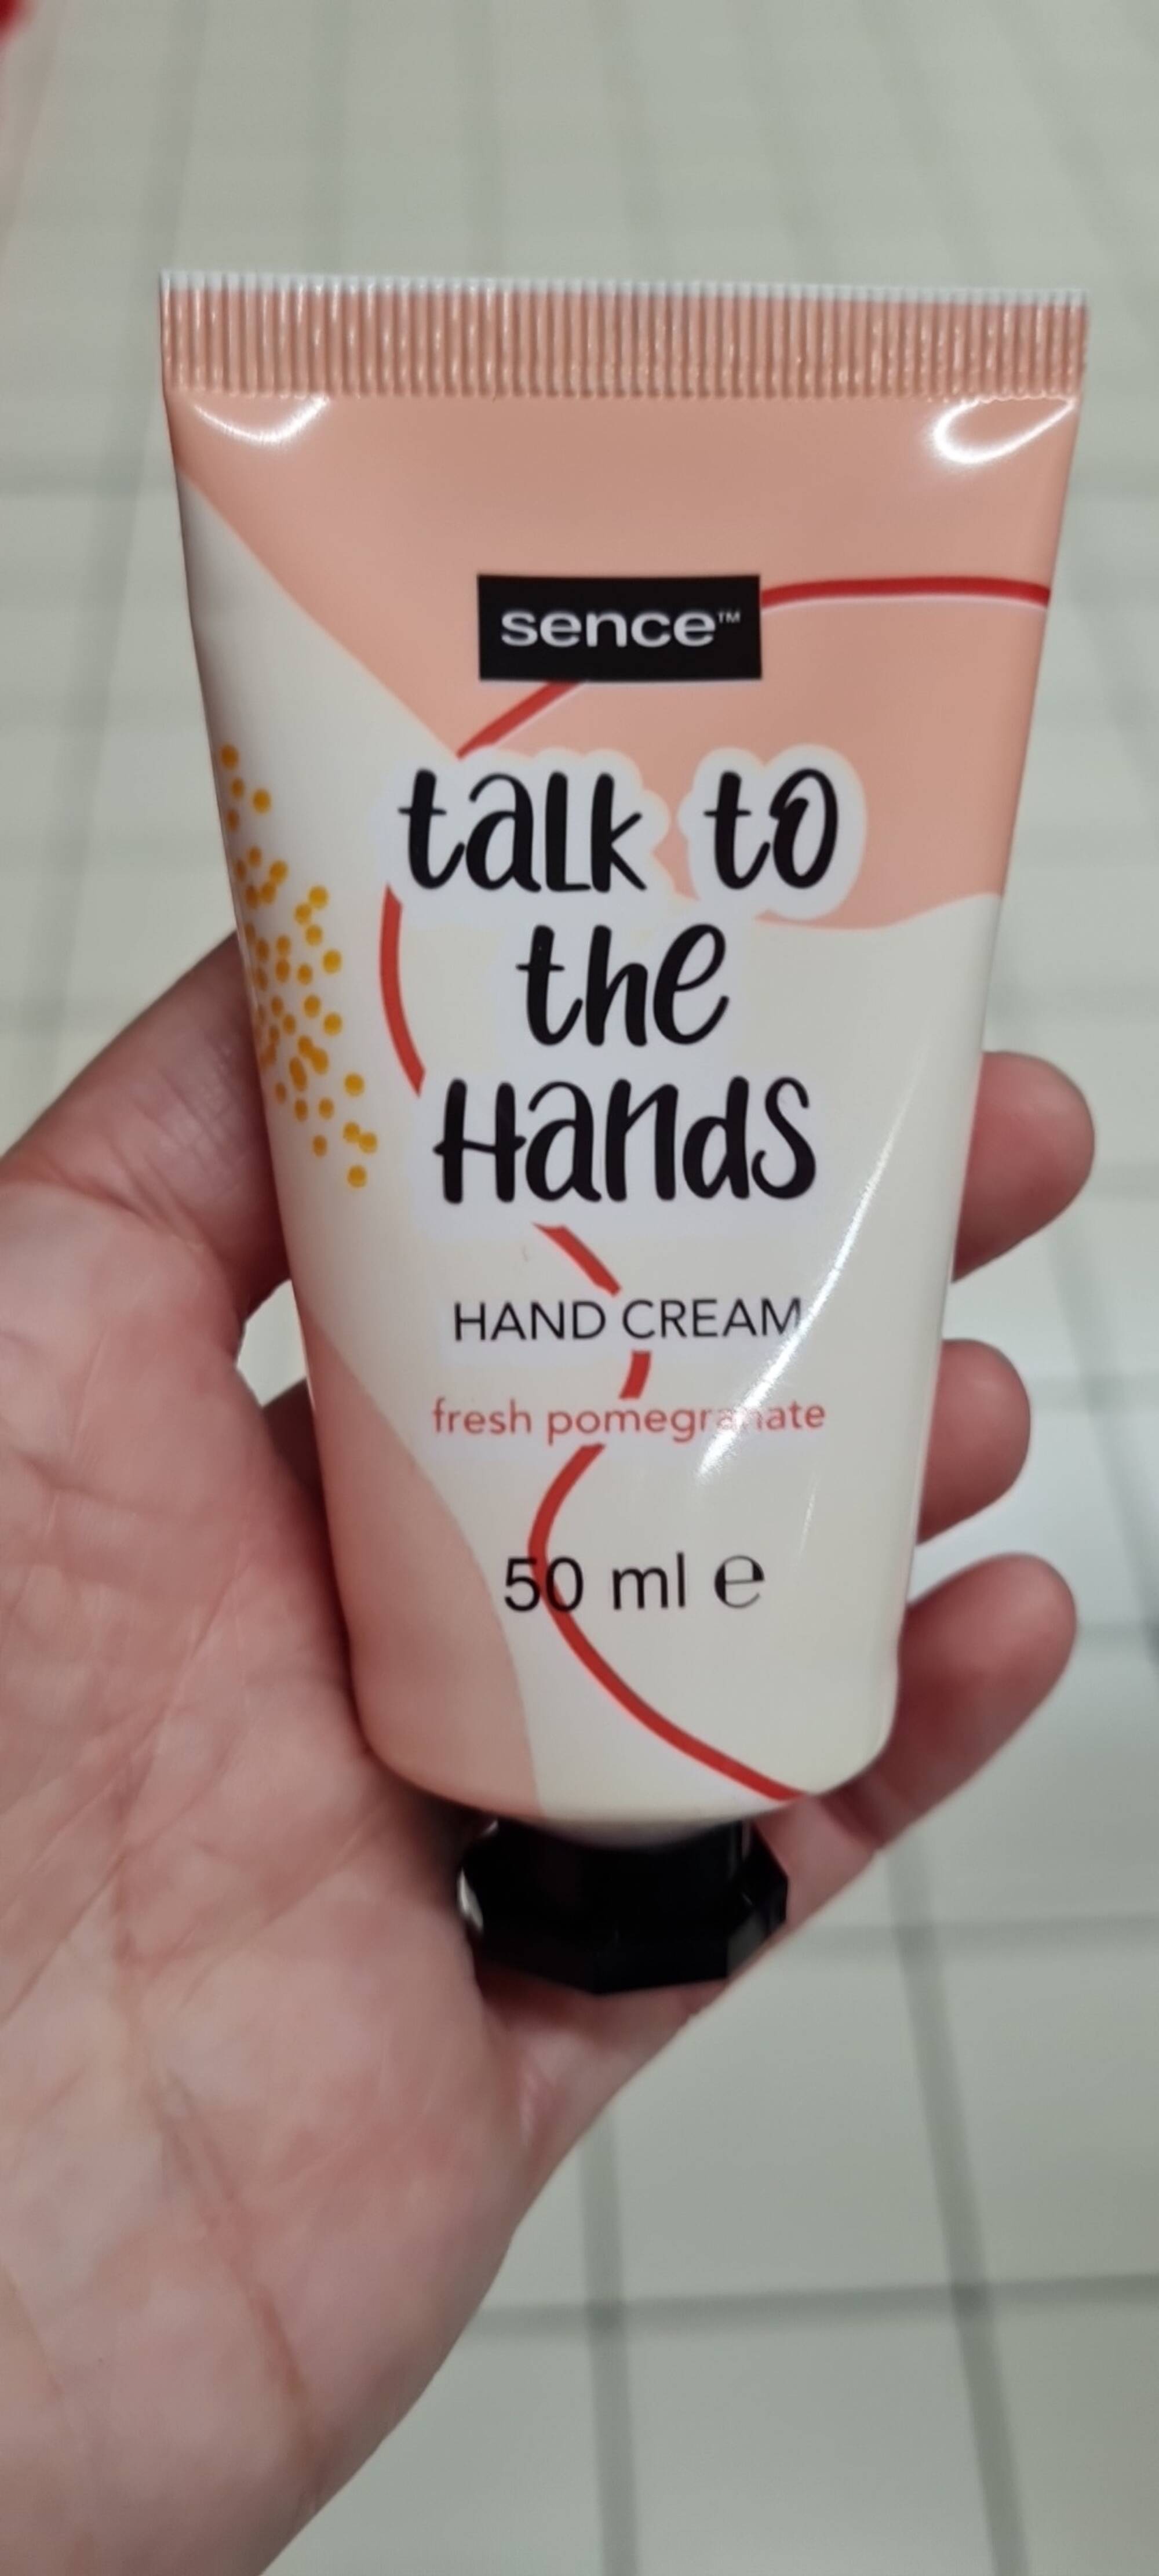 SENCE - Talk to the hands - Hand cream